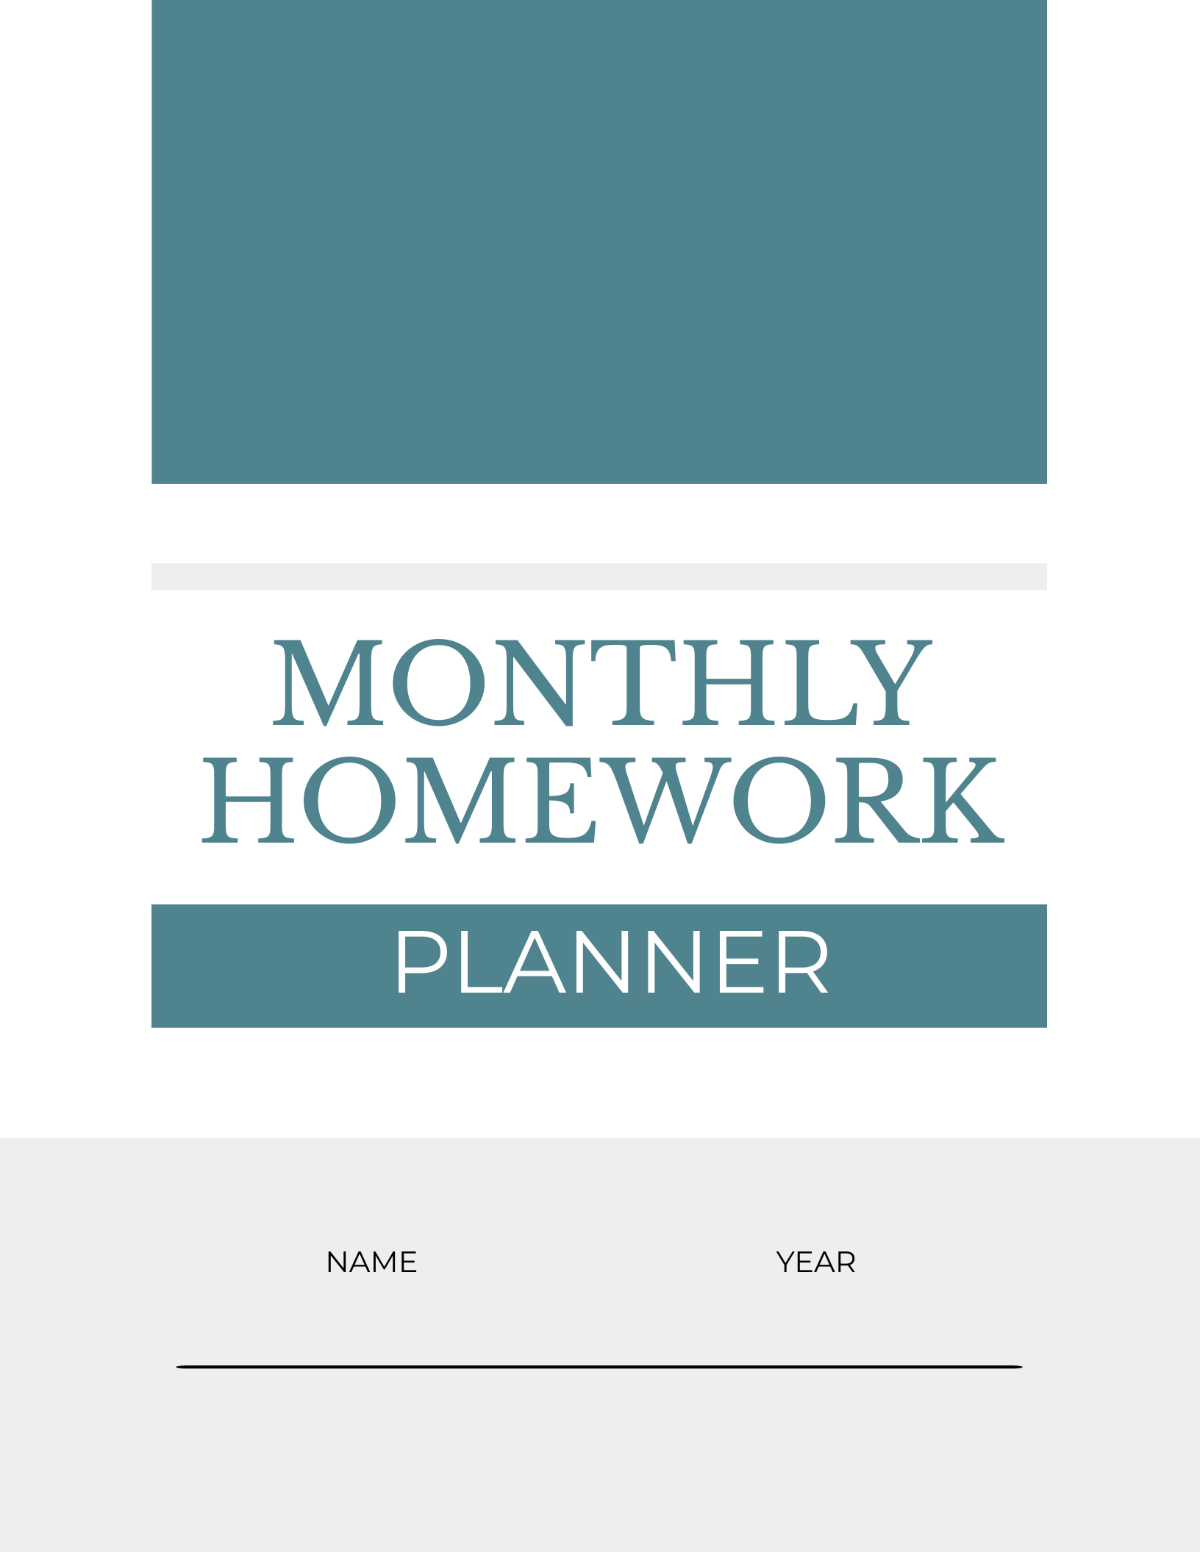 Monthly Homework Planner Template